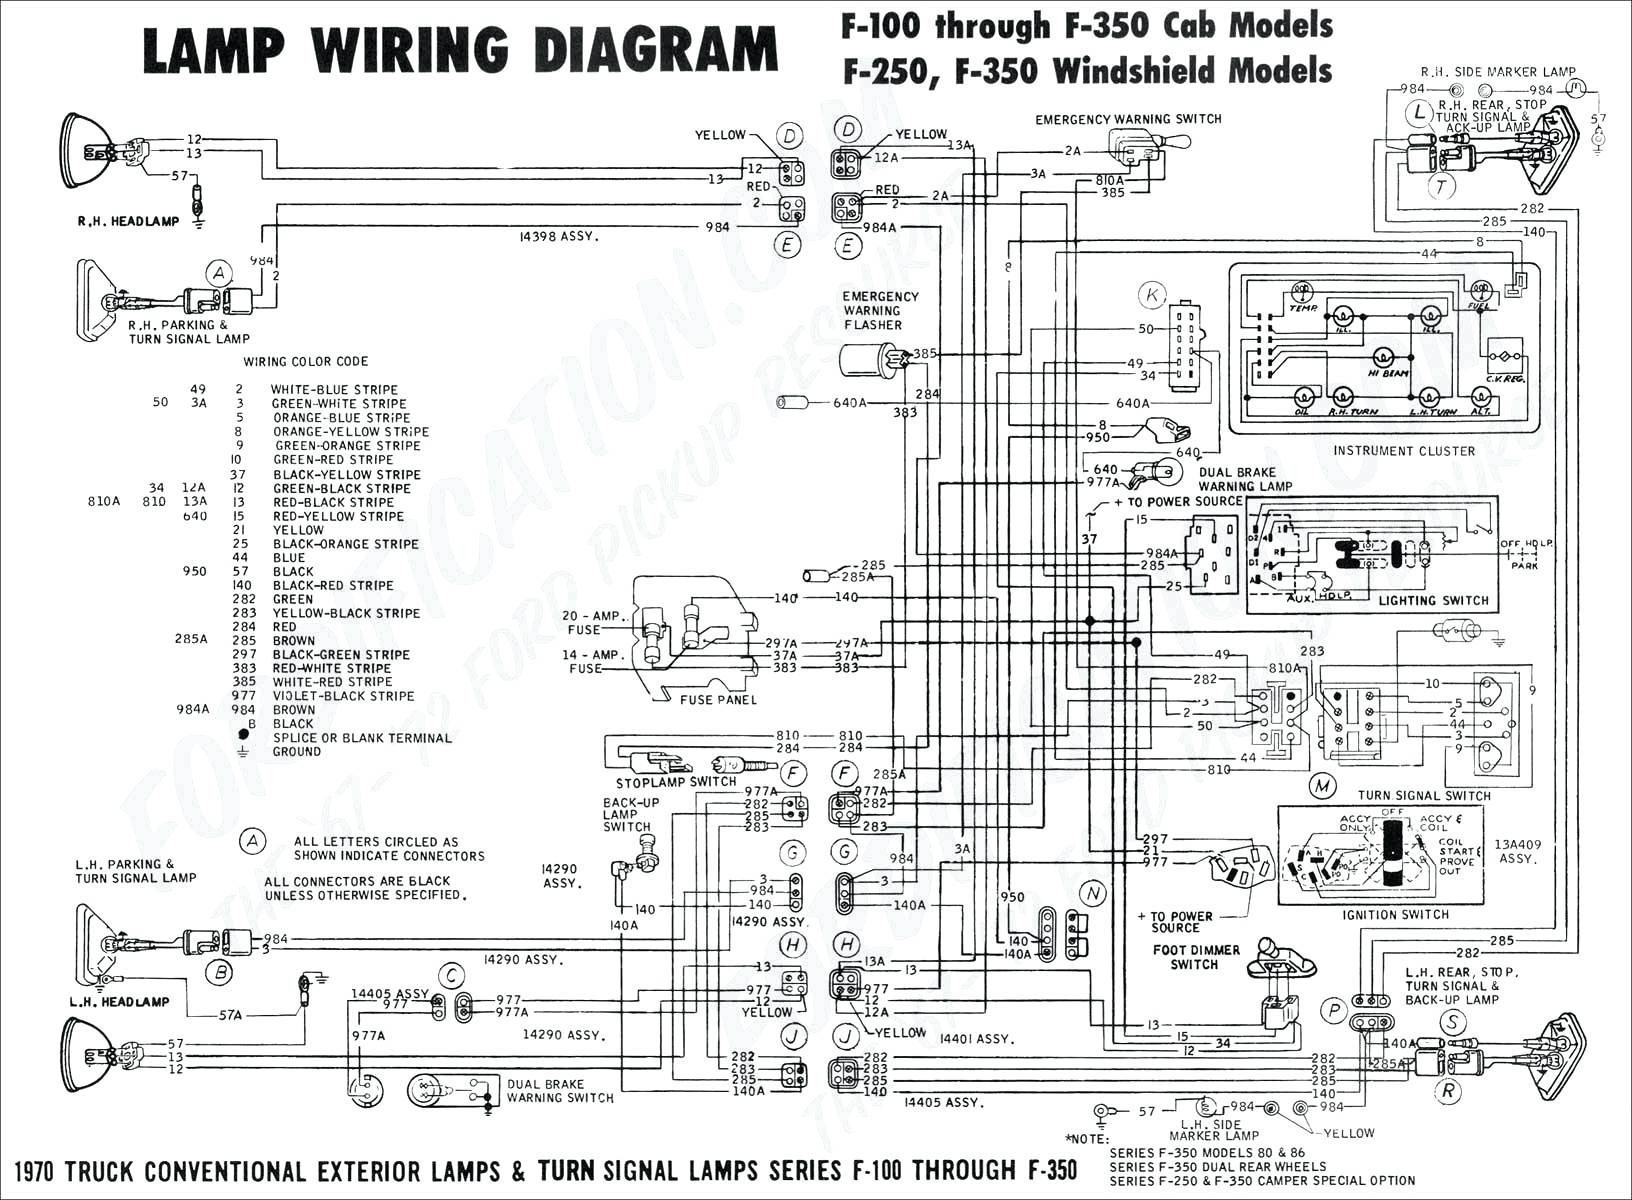 1995 Mazda 626 Engine Diagram 2001 Mazda 626 Wiring Diagram Download Simple Guide About Wiring Of 1995 Mazda 626 Engine Diagram